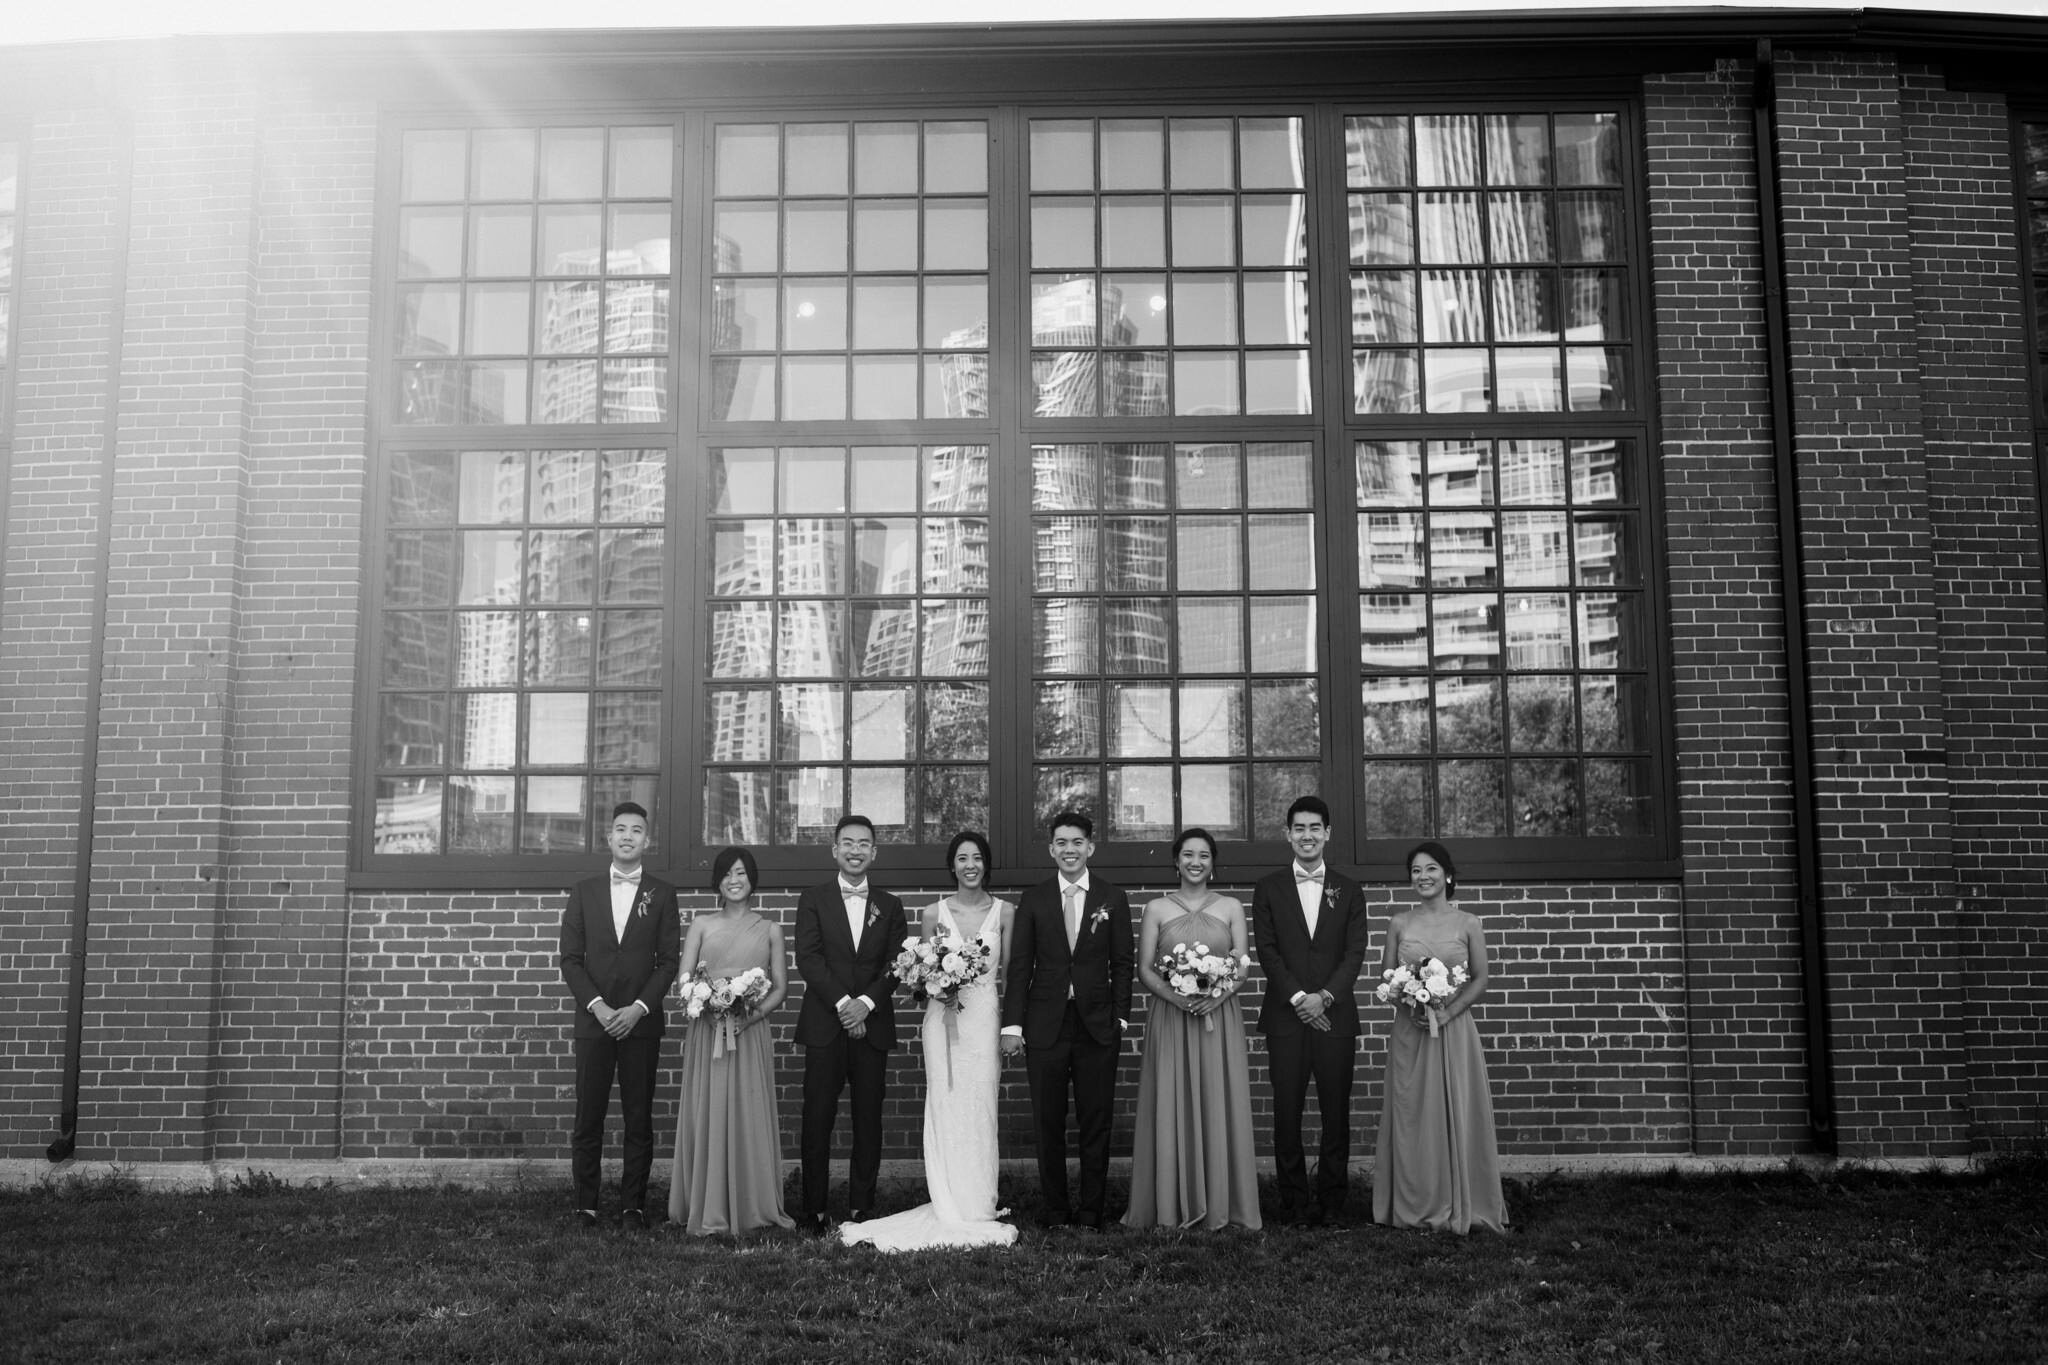 195-bridal-wedding-party-steamwhistle-brewery-portraits-photos-toronto-reception.jpg